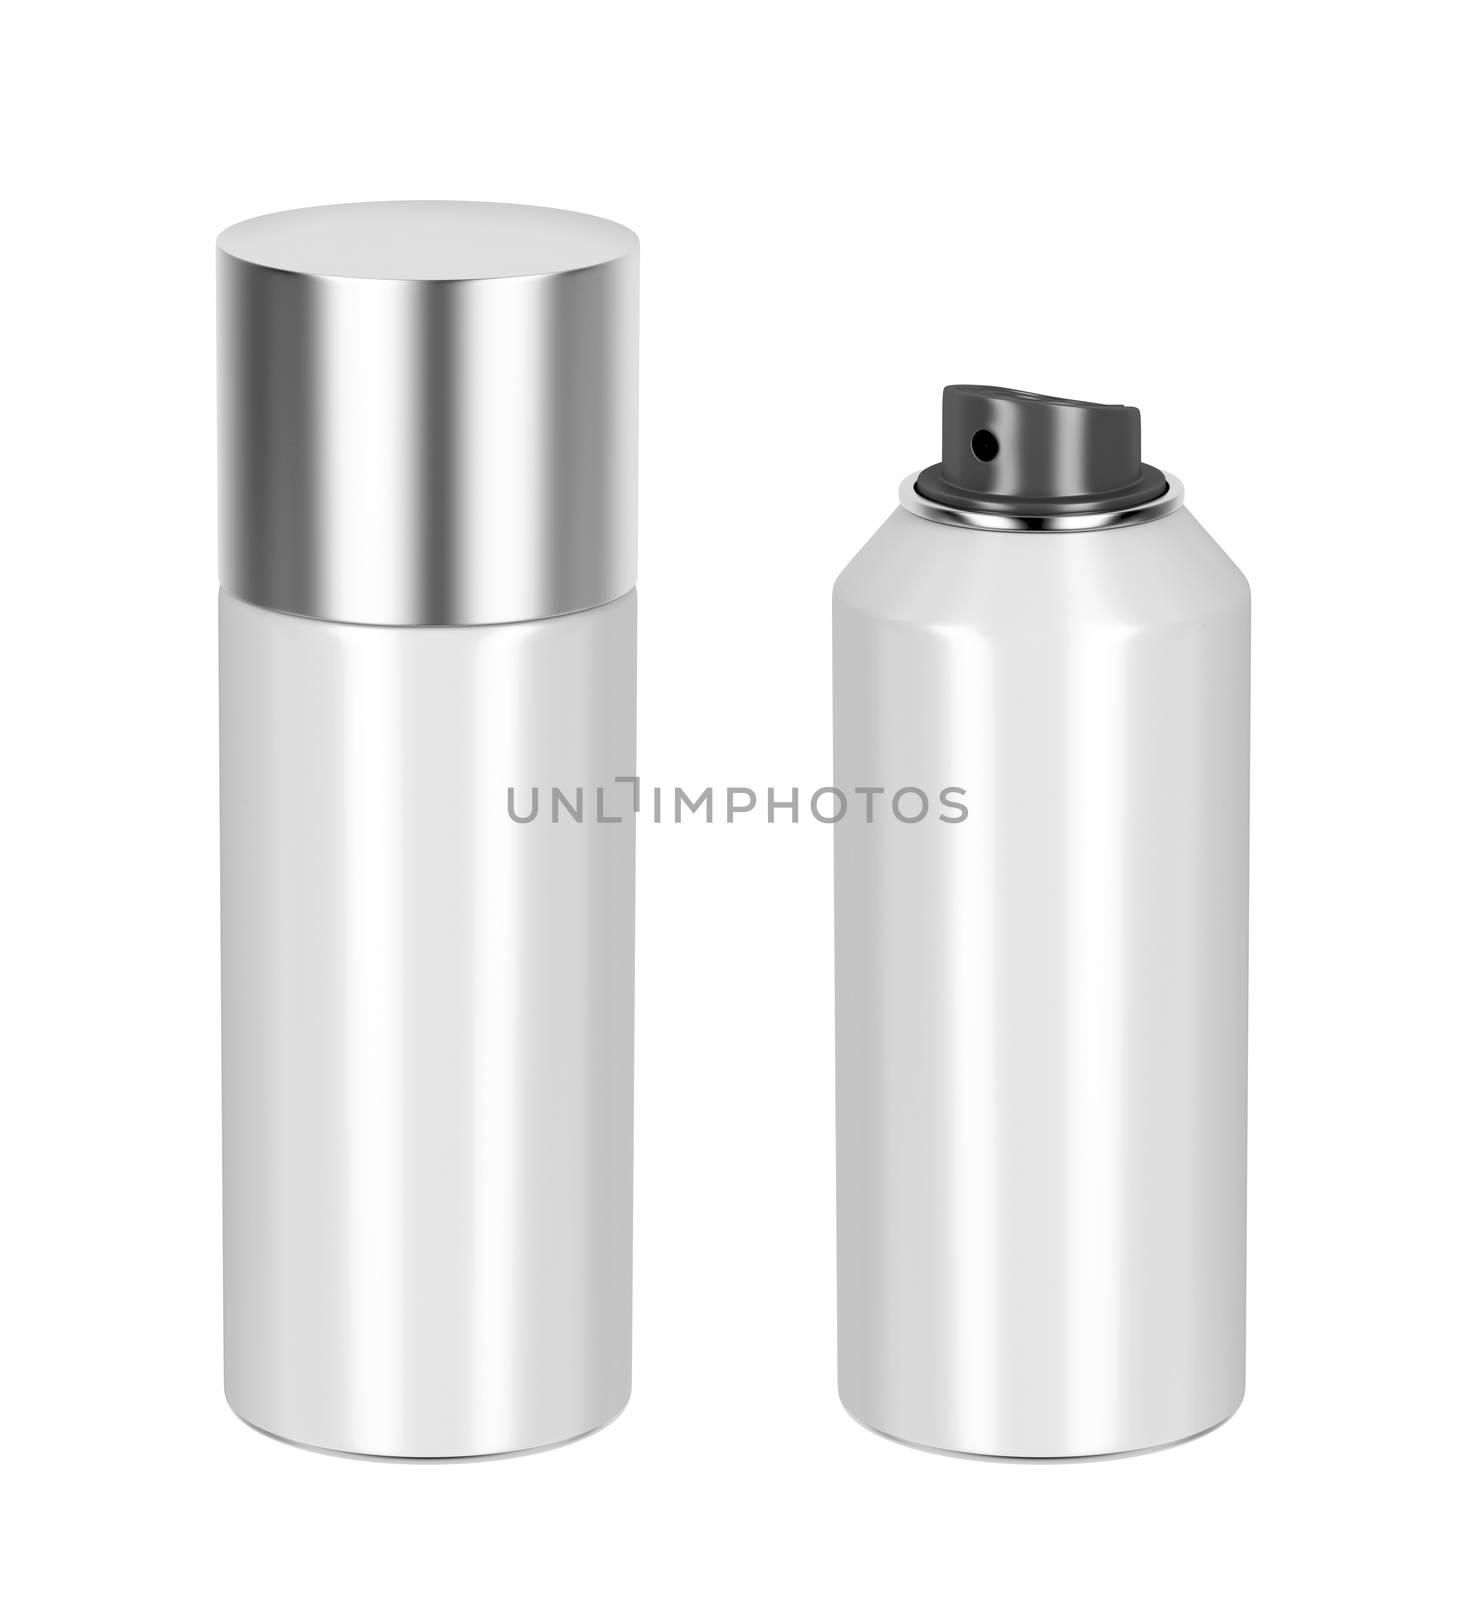 Blank aerosol cans isolated on white background